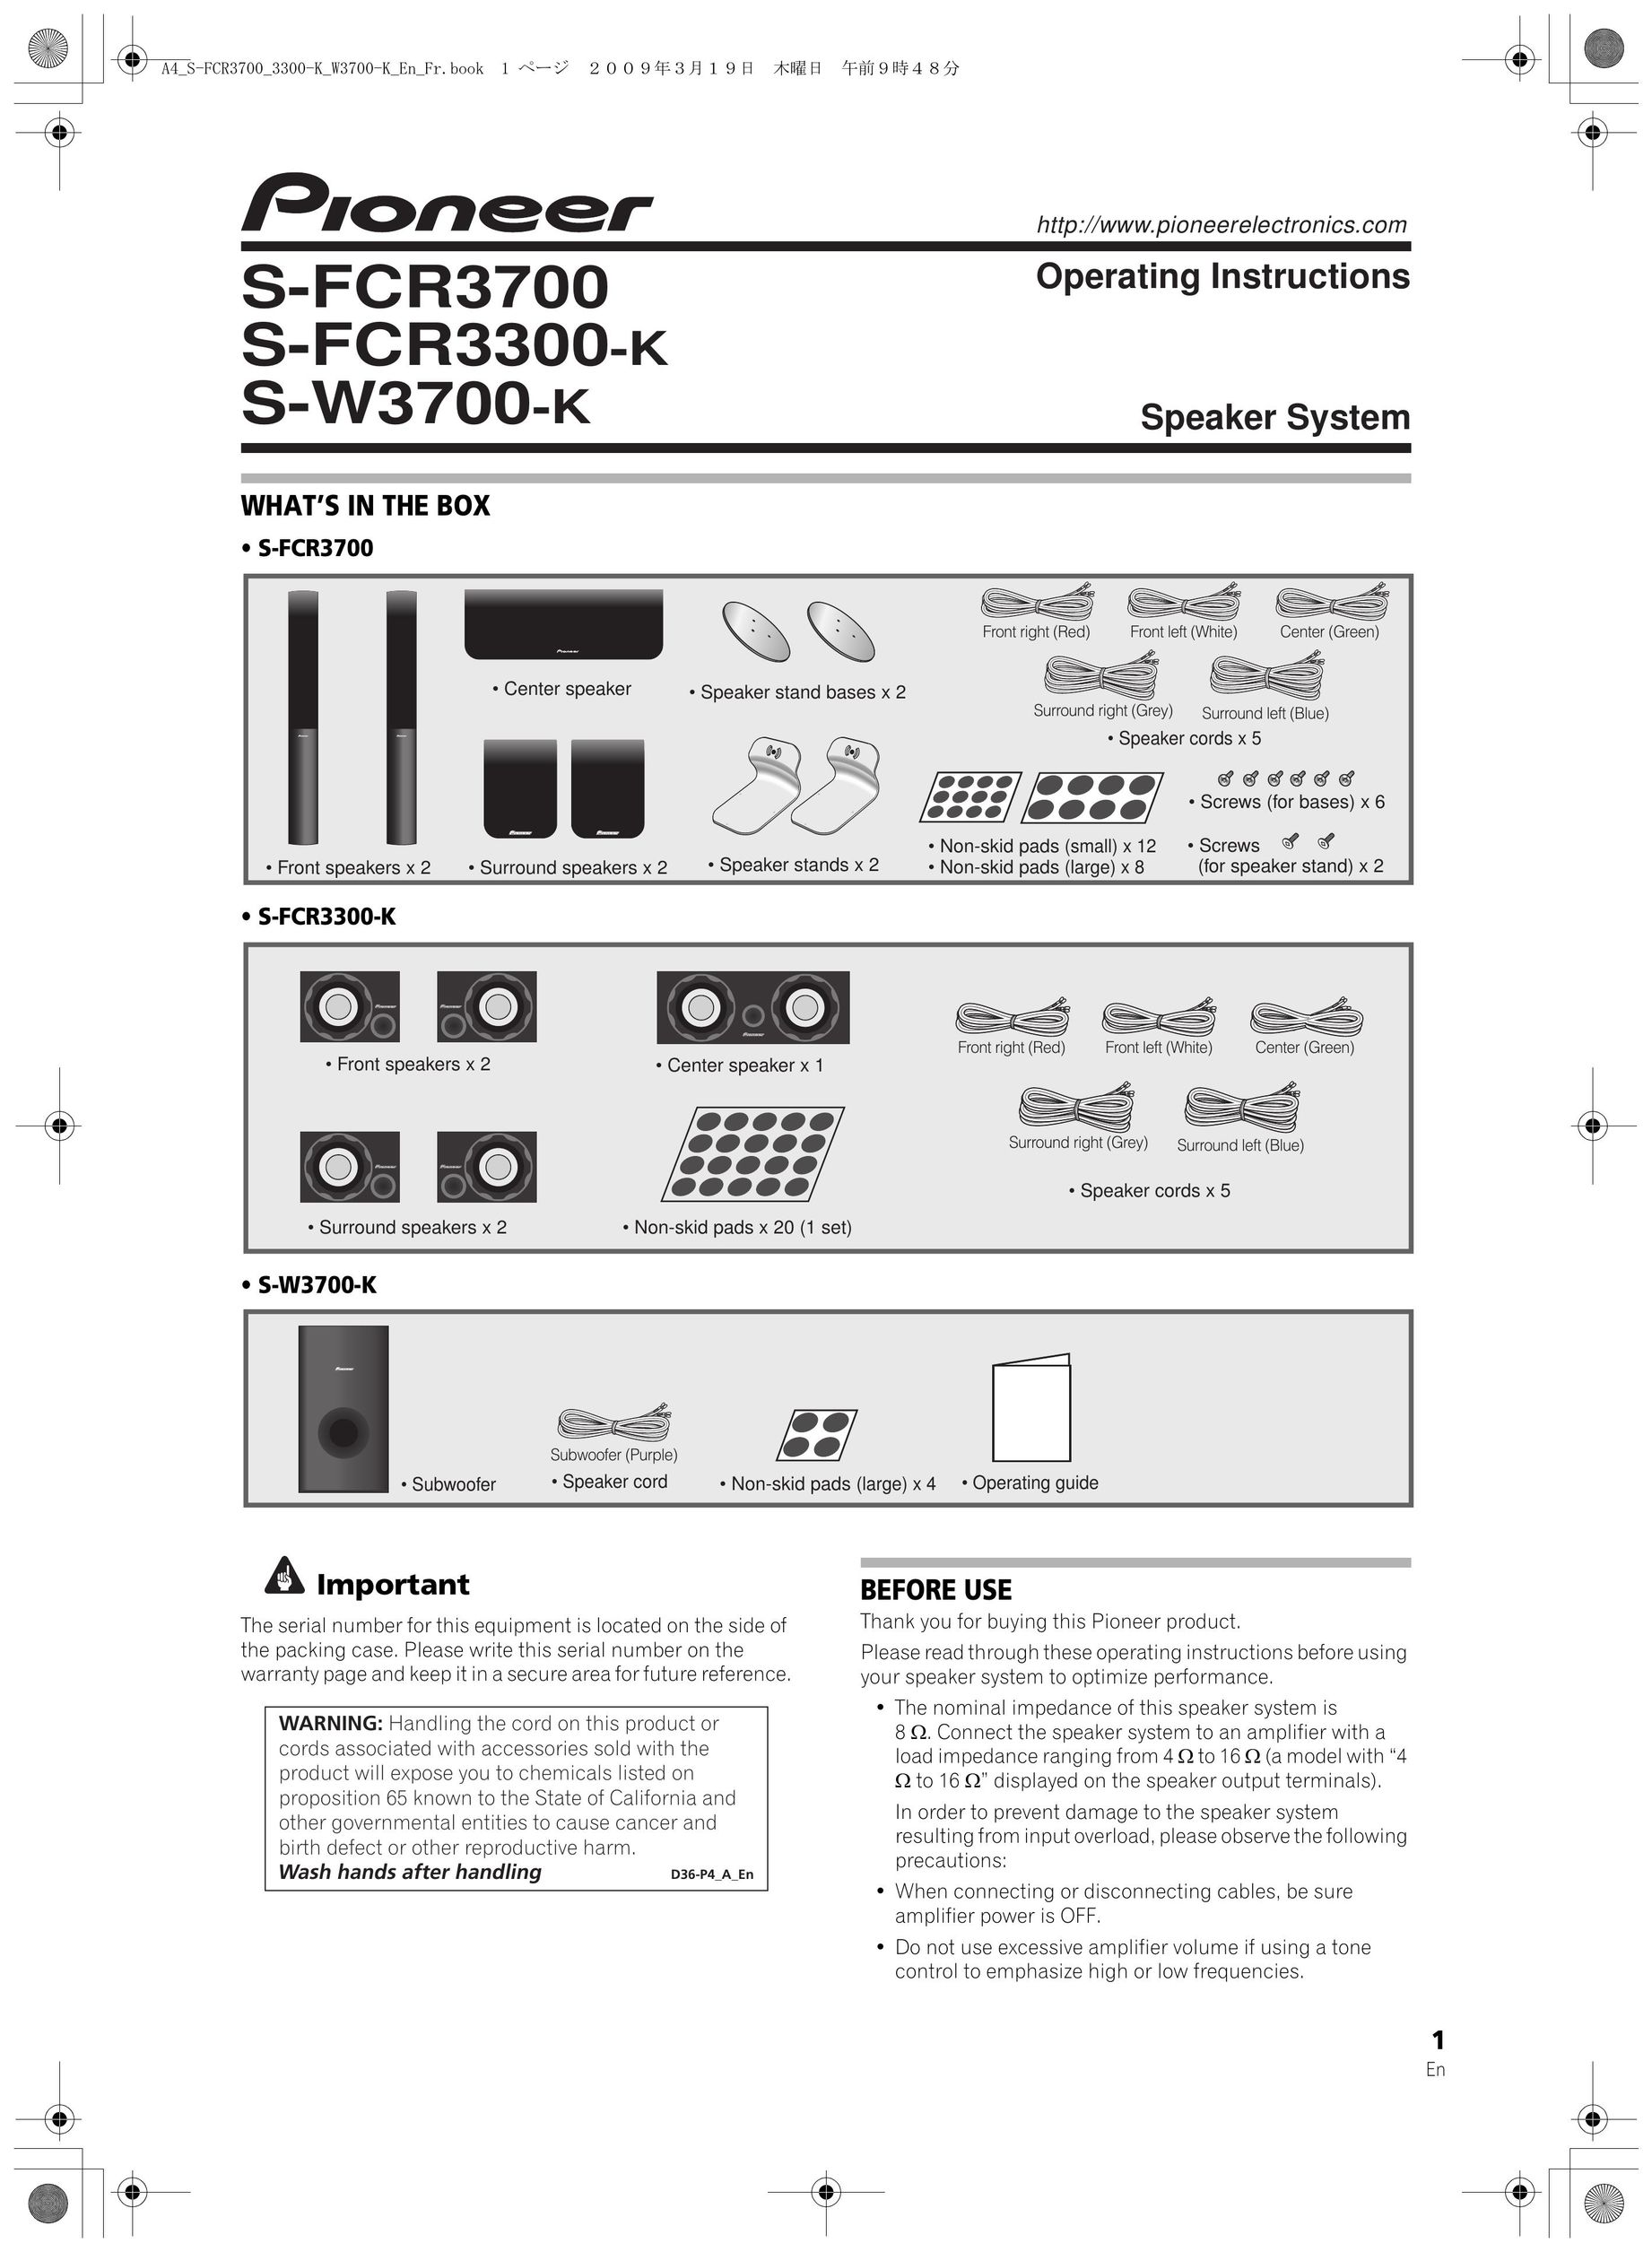 Pioneer S-FCR3700 Speaker System User Manual